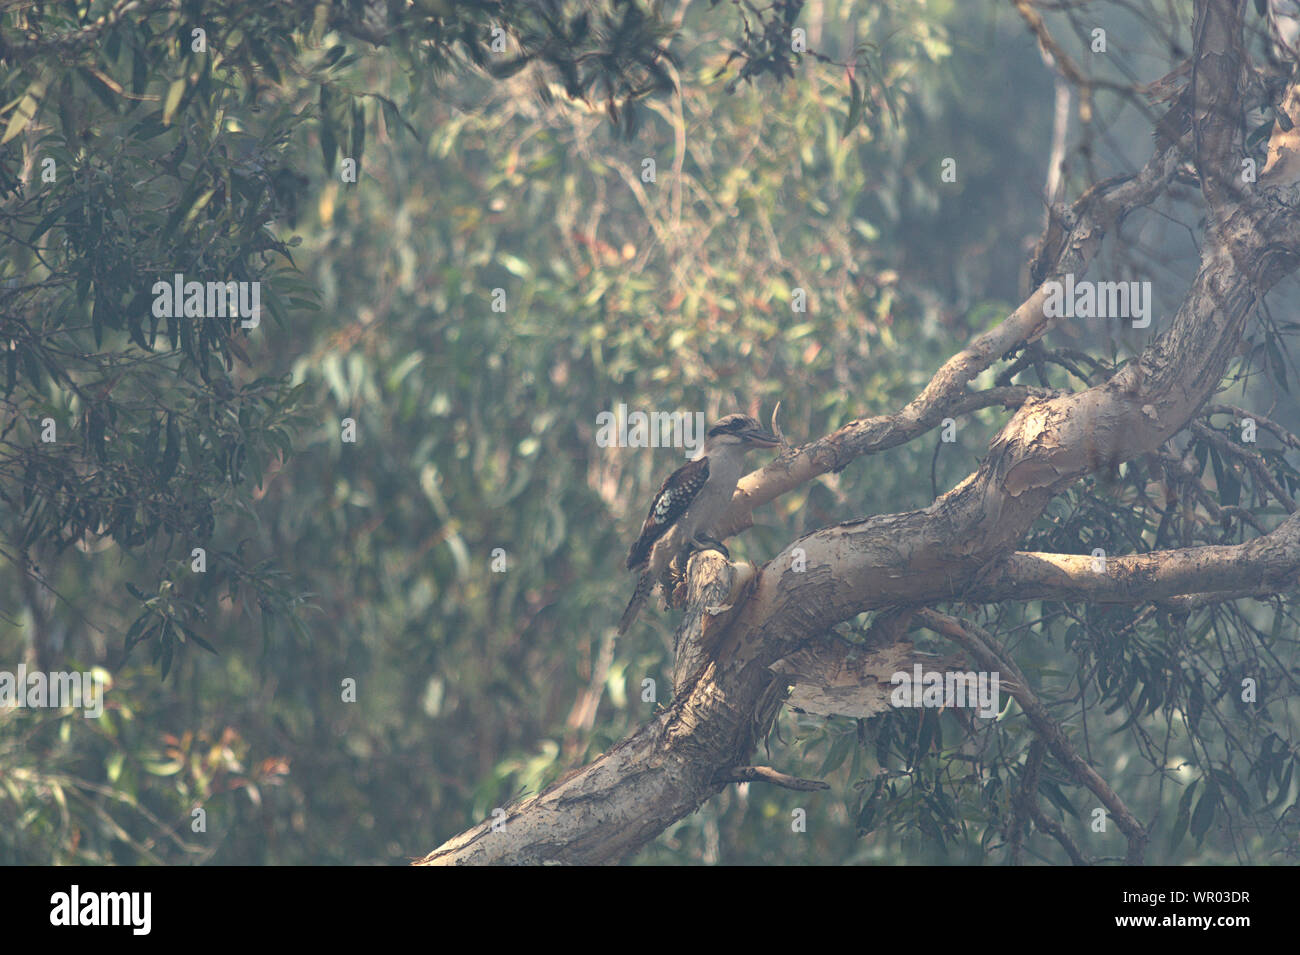 Kookaburra in a tree affected by smoke Stock Photo